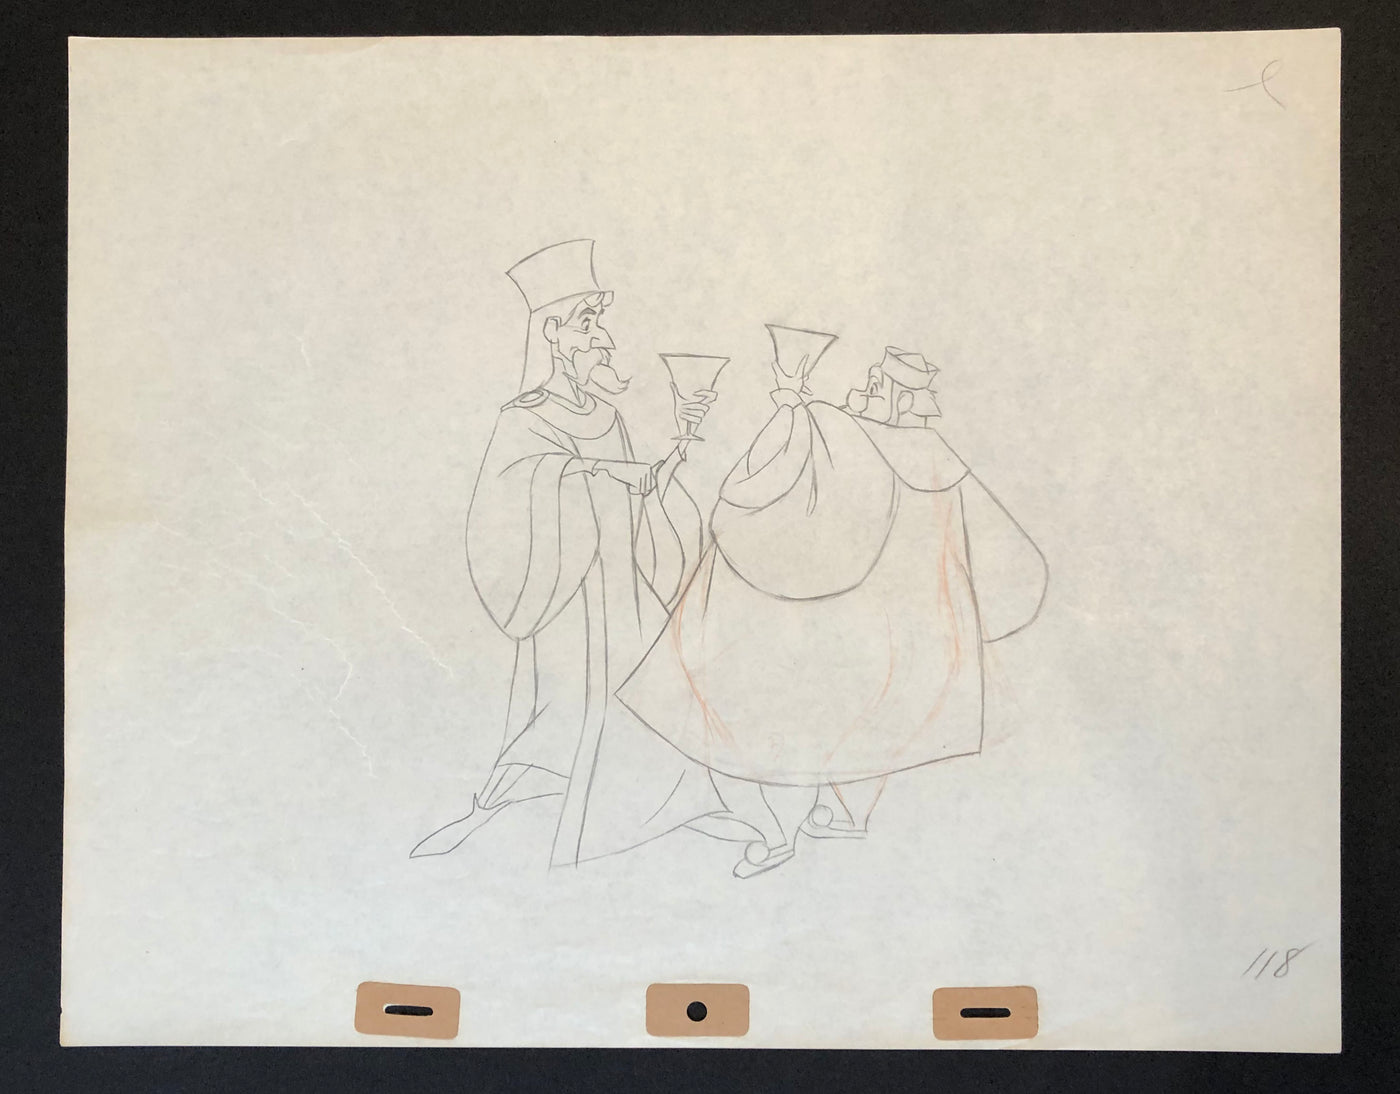 Original Walt Disney Production Drawing from Sleeping Beauty featuring King Stefan and King Hubert